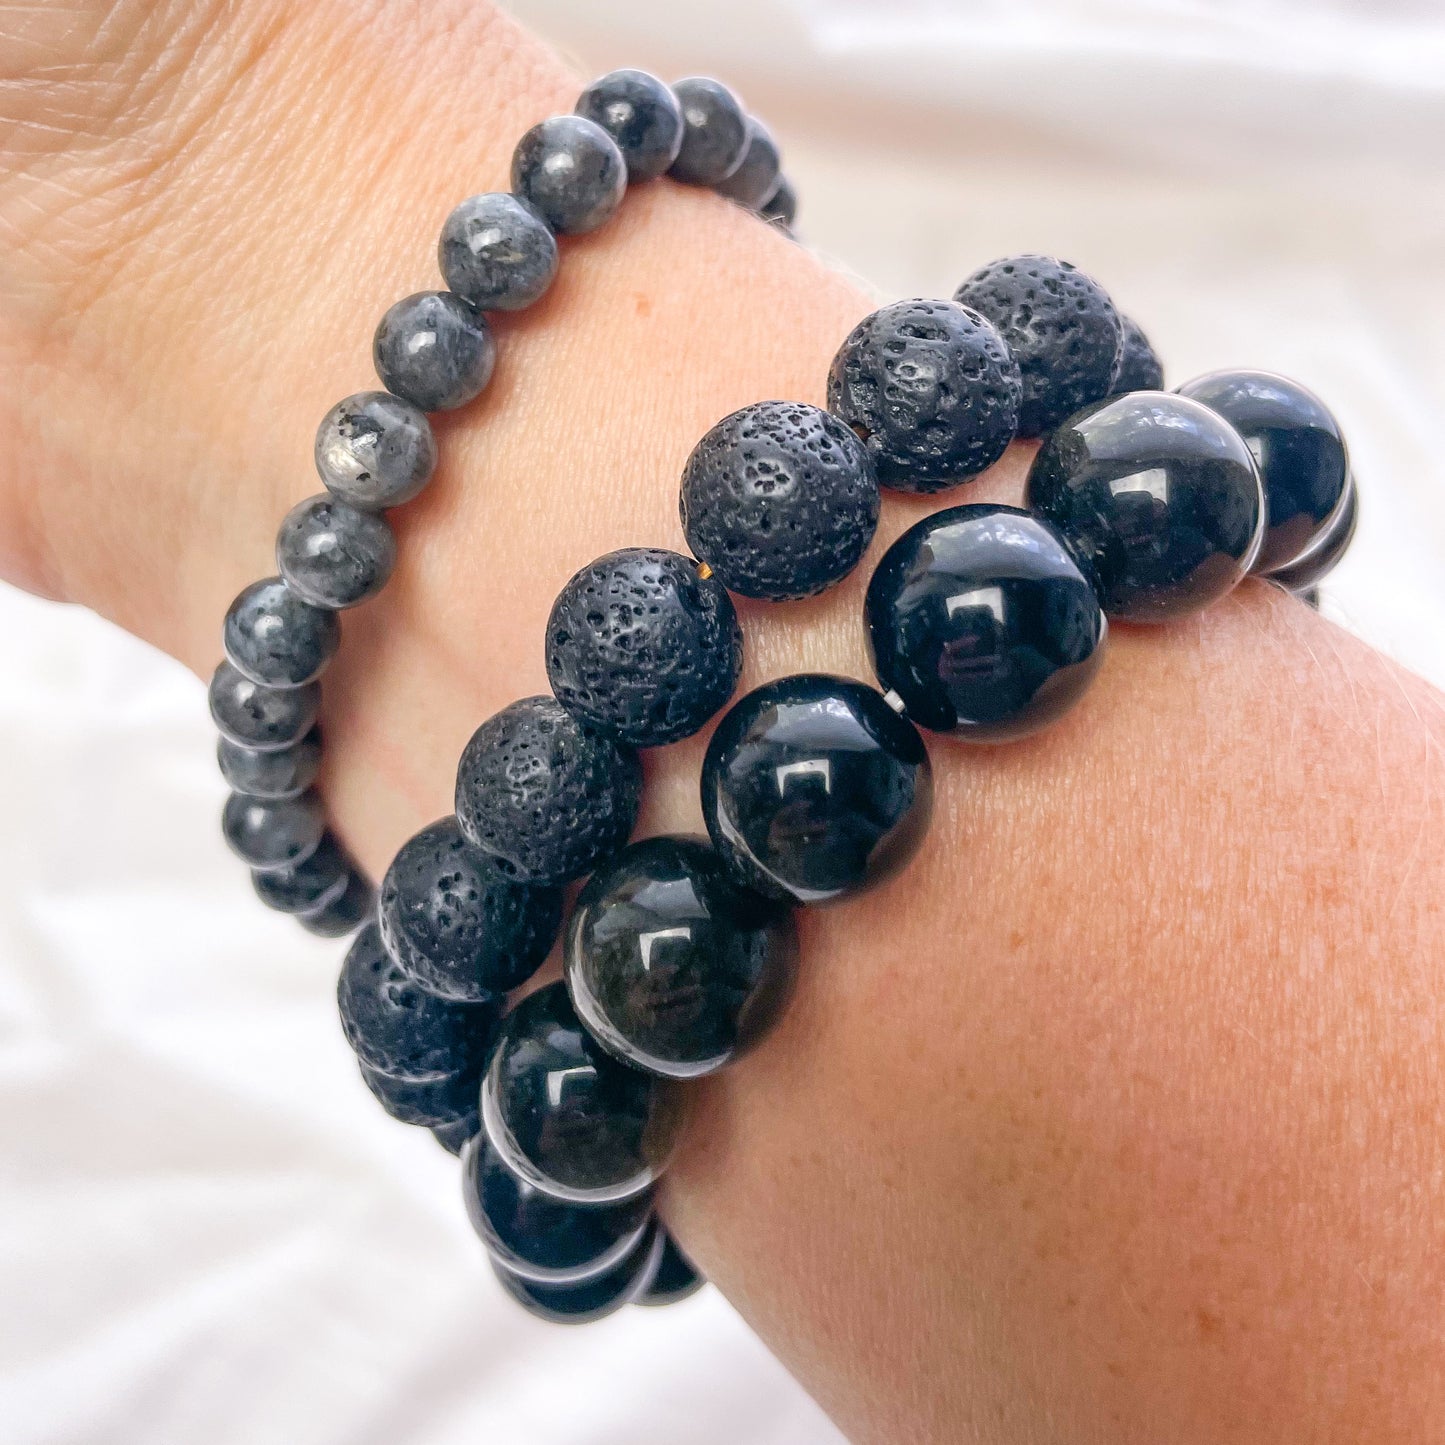 Crystal bead bracelet - Larvikite, lavastone or gold sheen obsidian